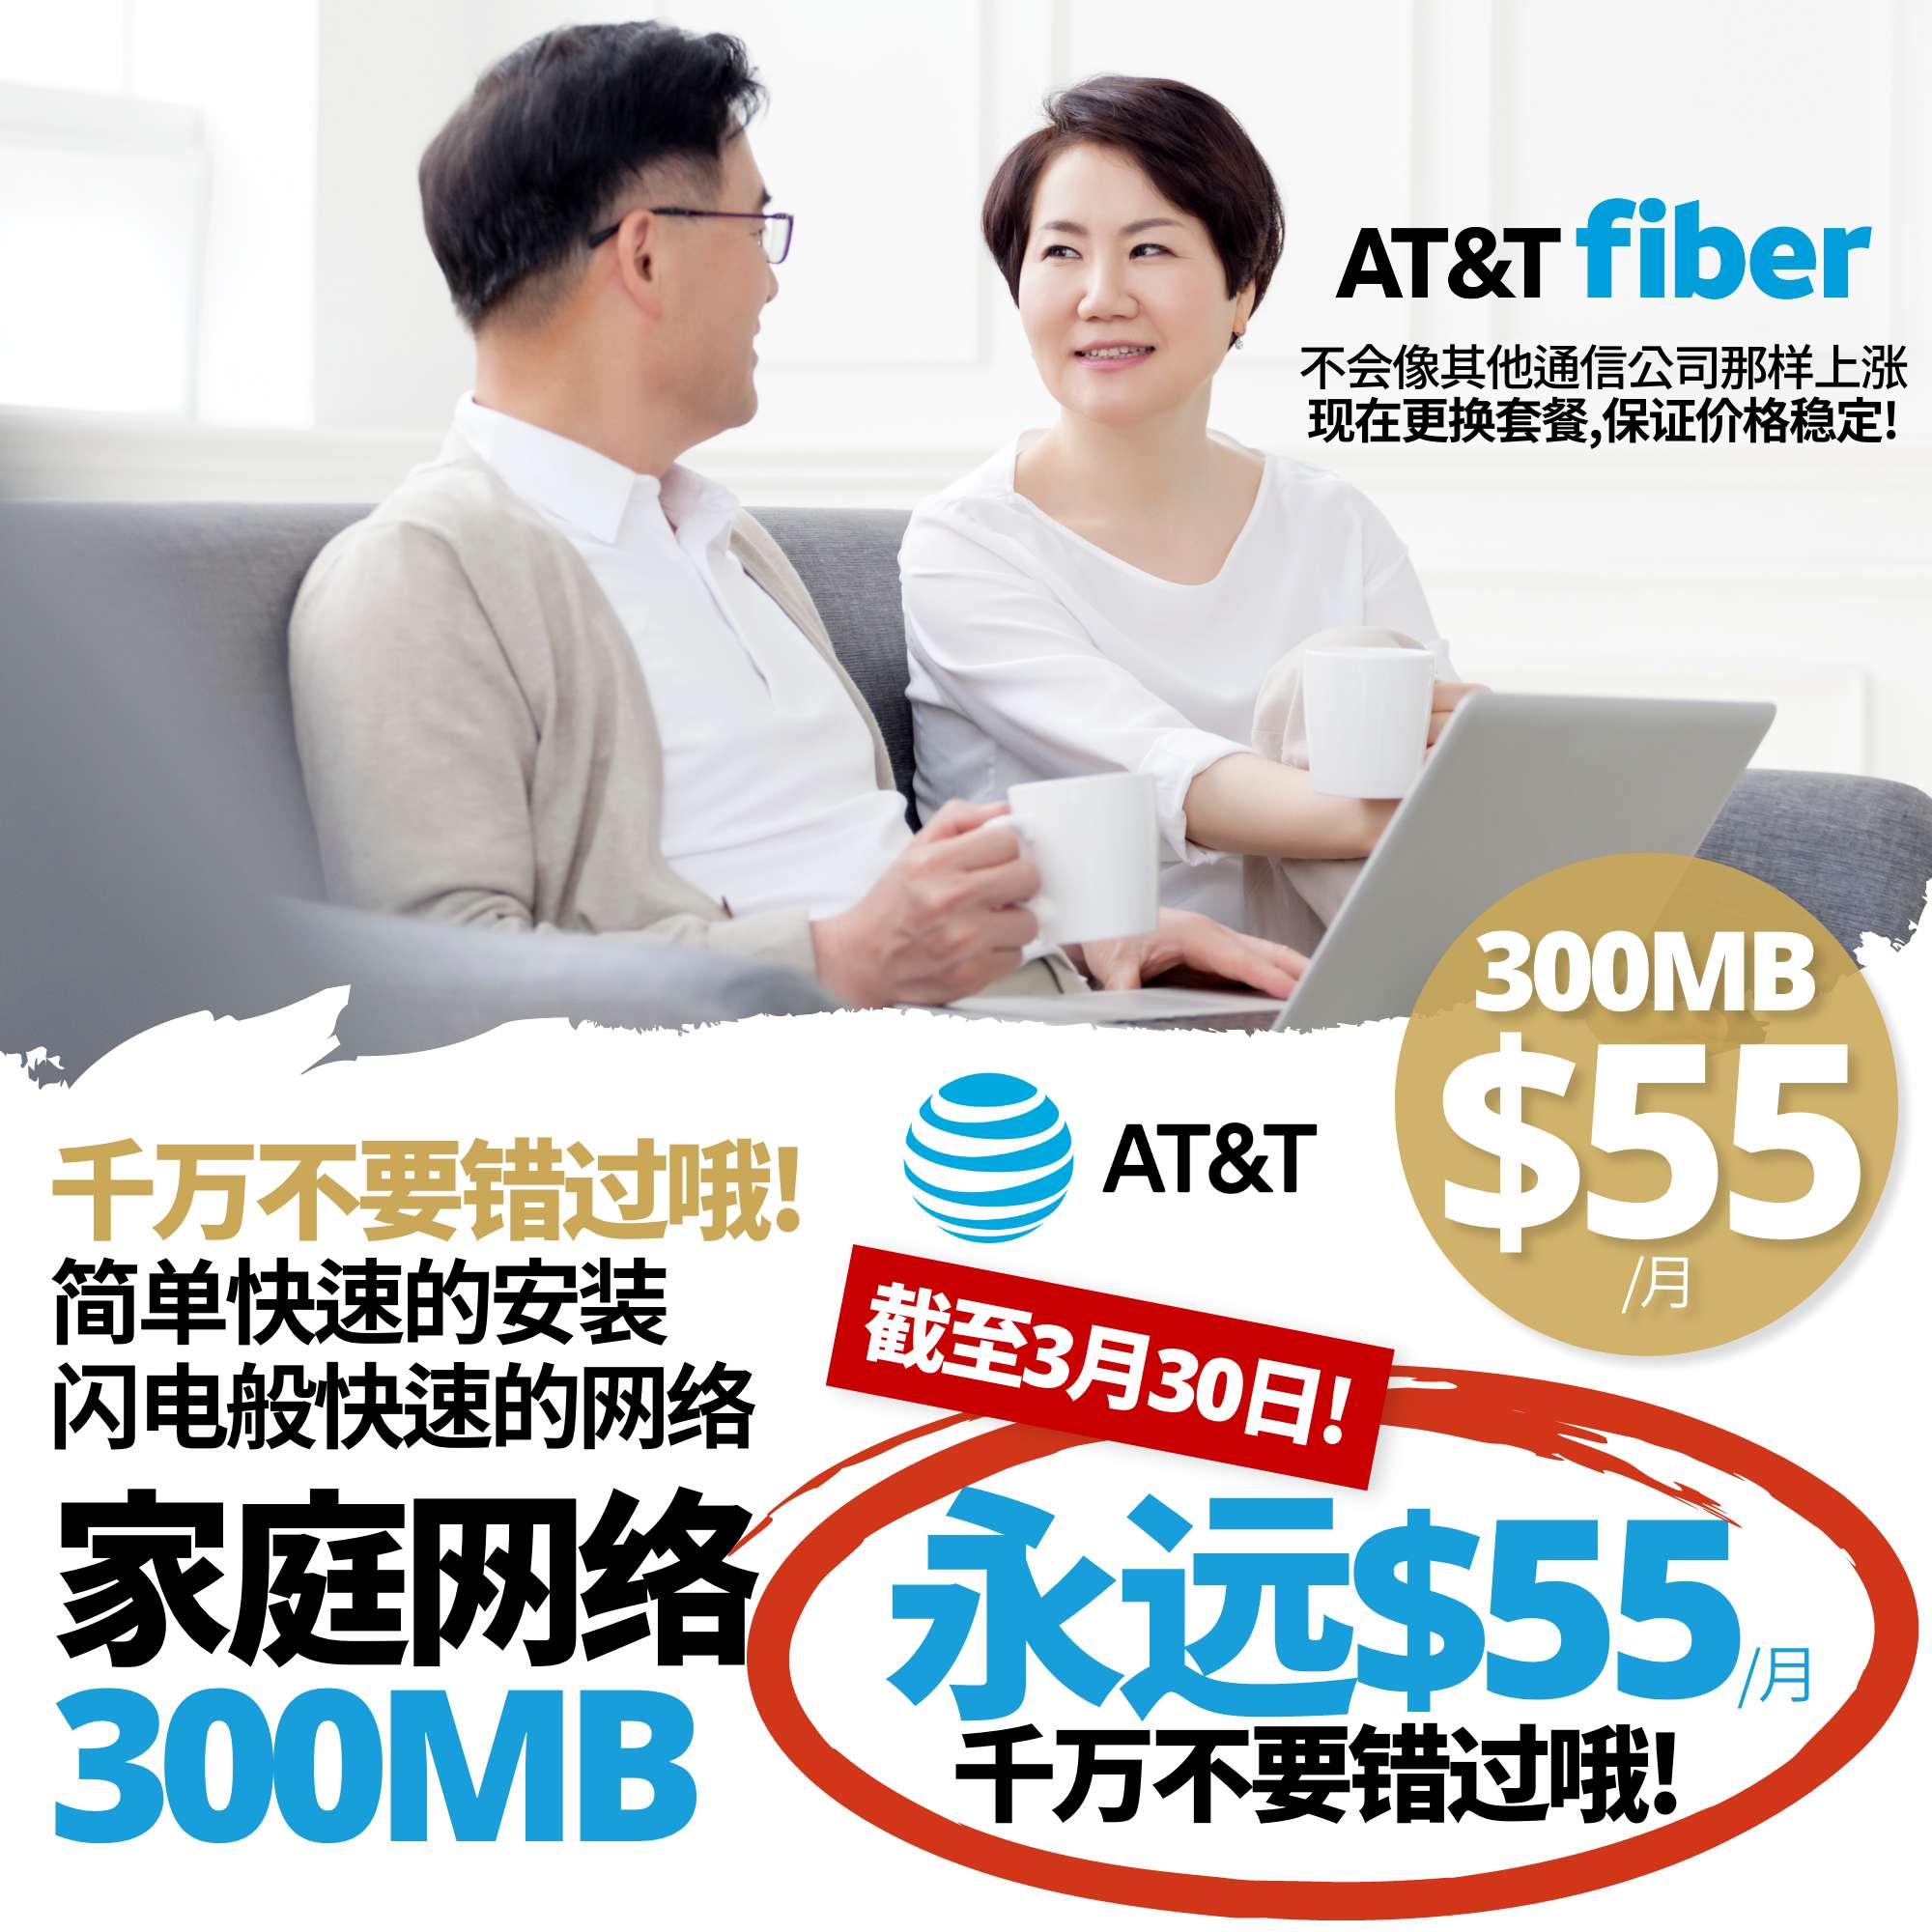 ATT Chinese - AT&T華人公認經銷商獨家特價諮詢